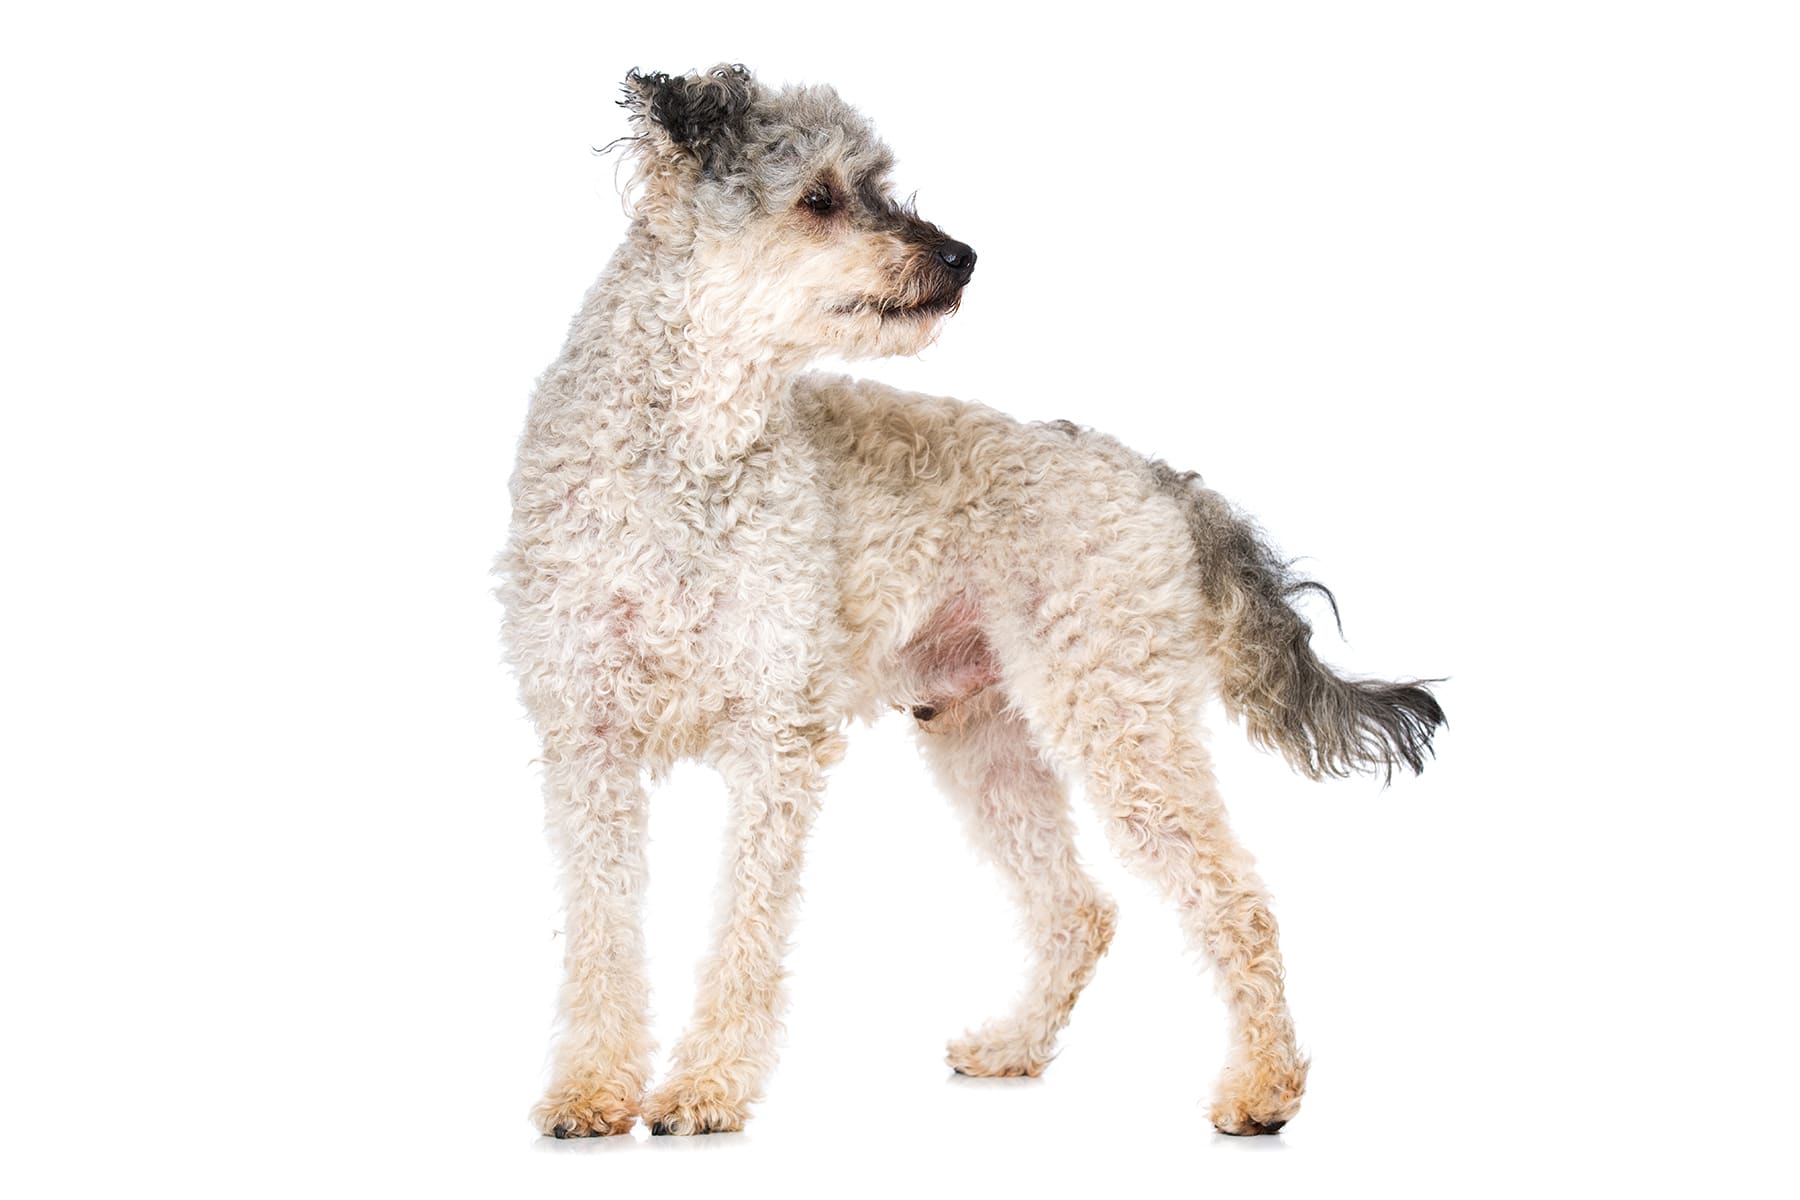 Pumi dog breed profile